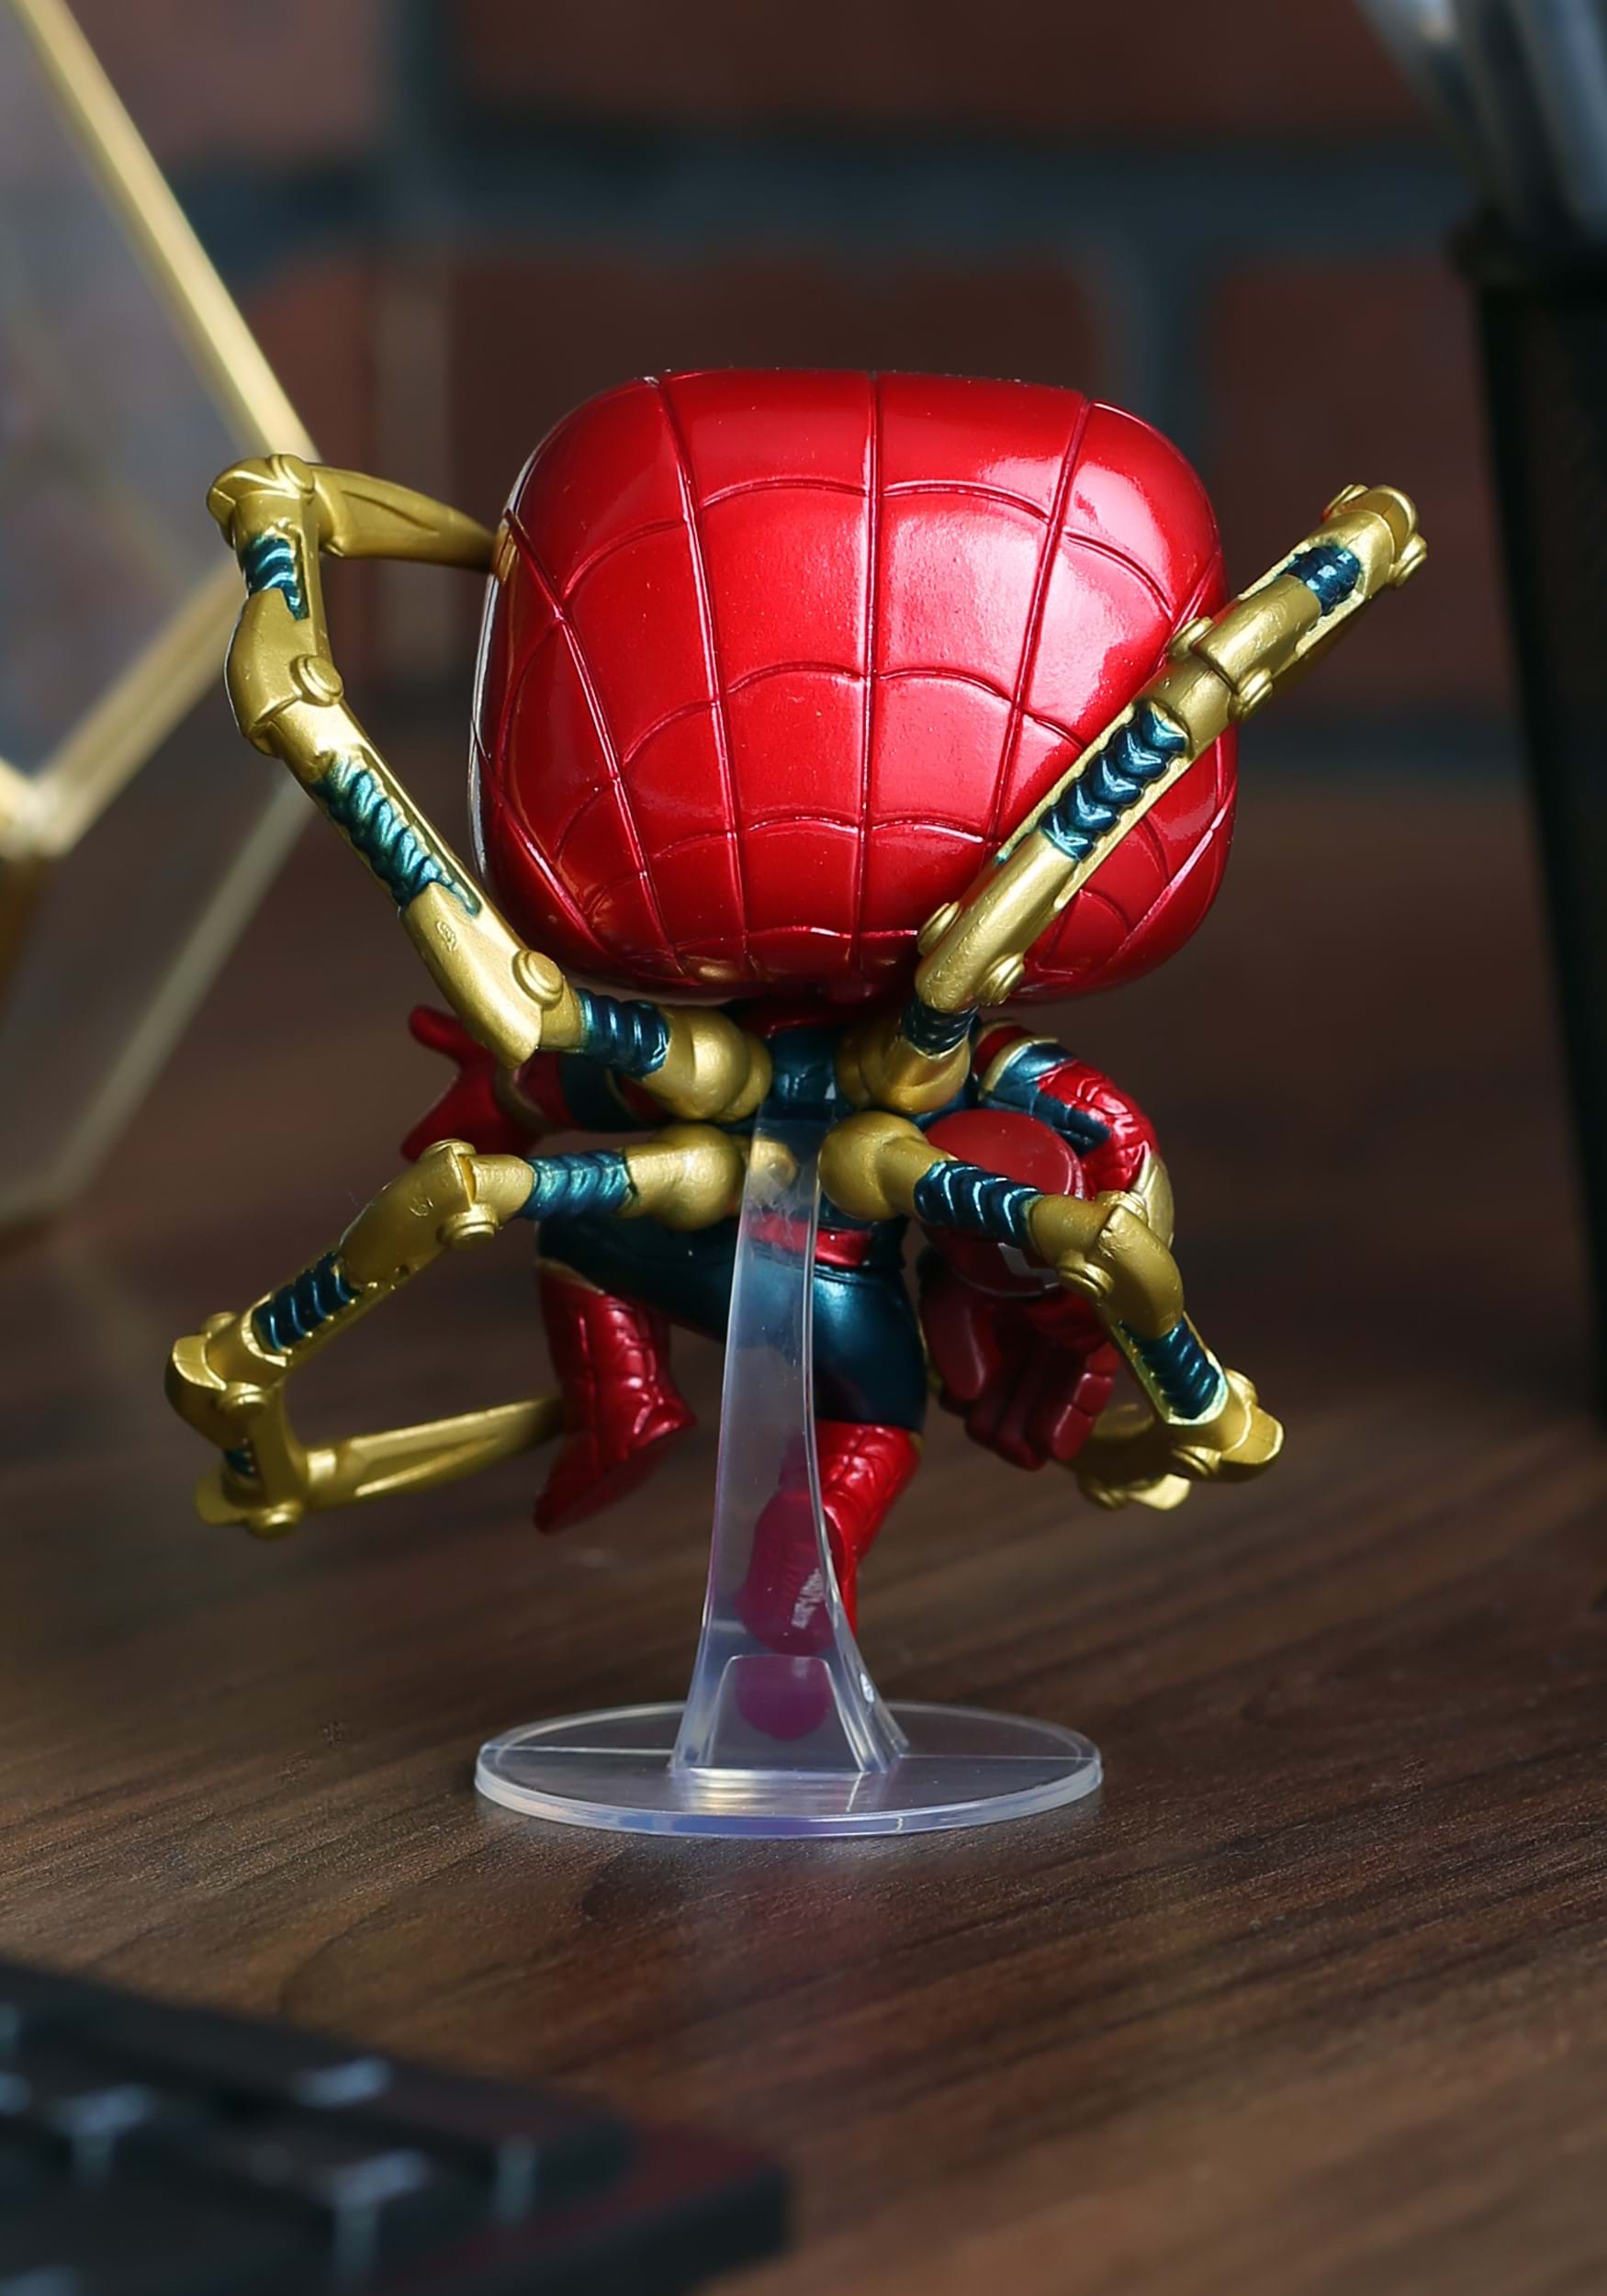 Figurine Iron Spider FUNKO POP Marvel Avengers End game numéro 574